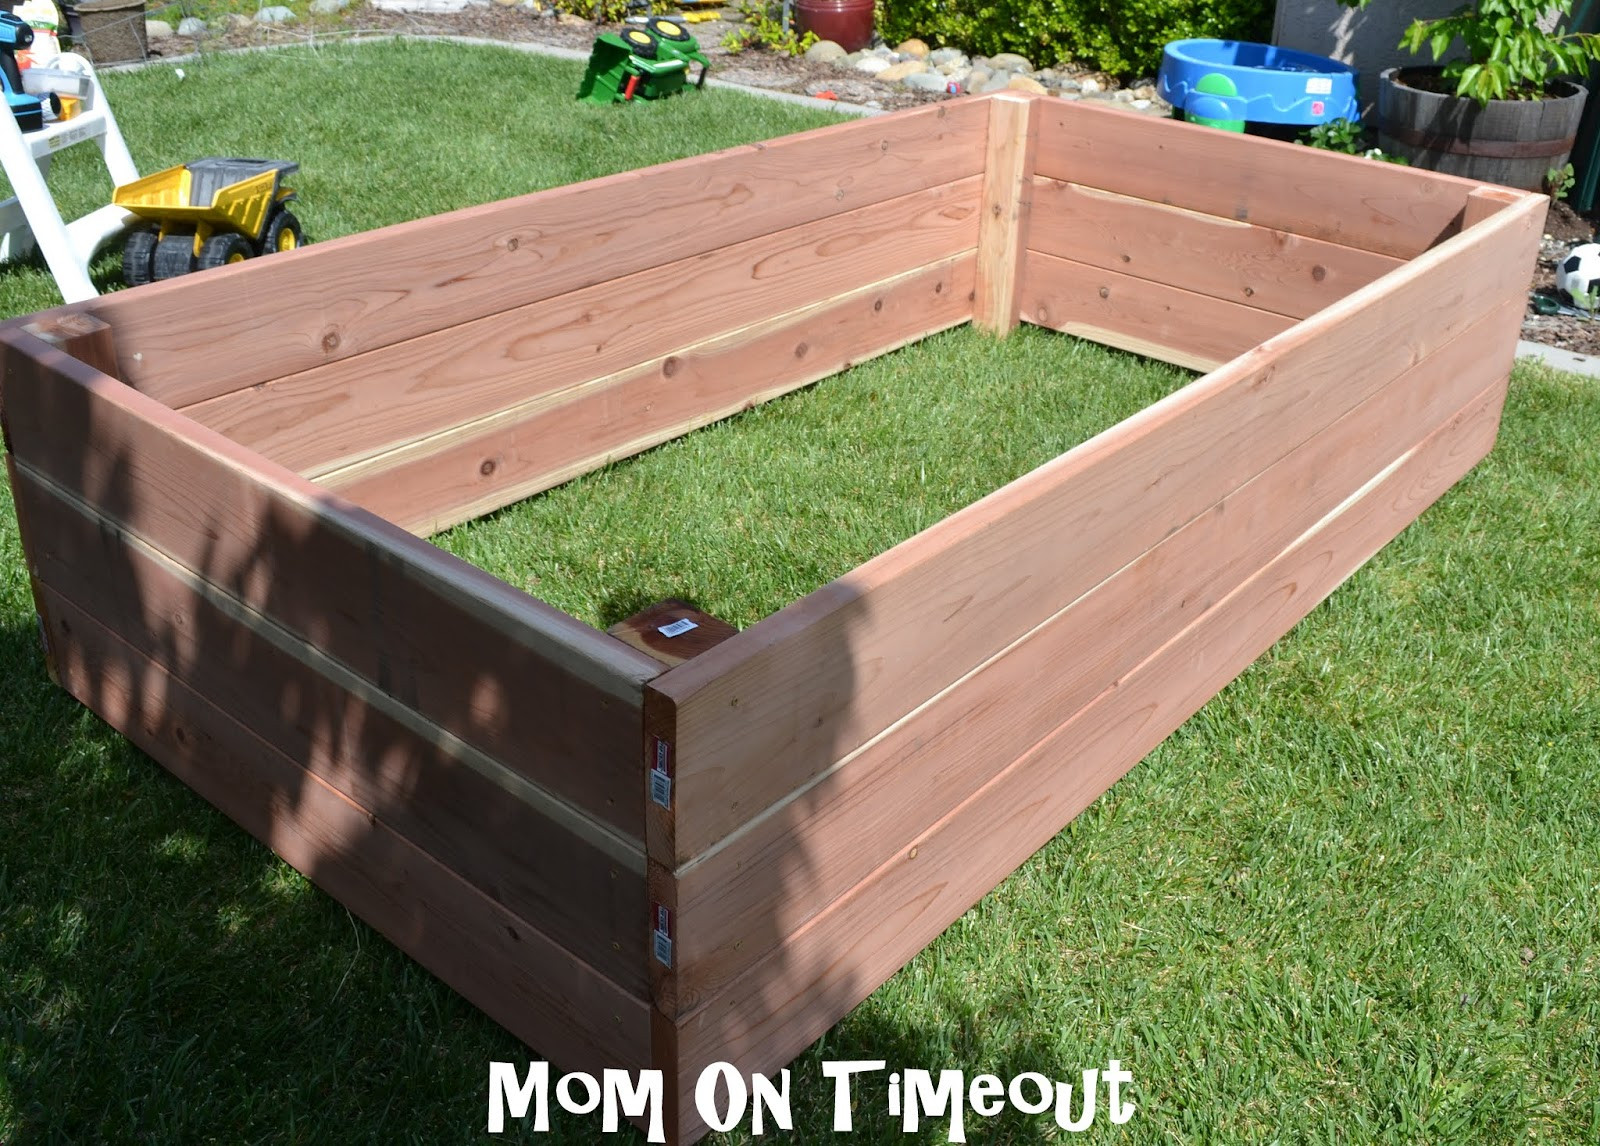 Best ideas about DIY Planter Box Designs
. Save or Pin DIY Garden Planter Box Tutorial Now.